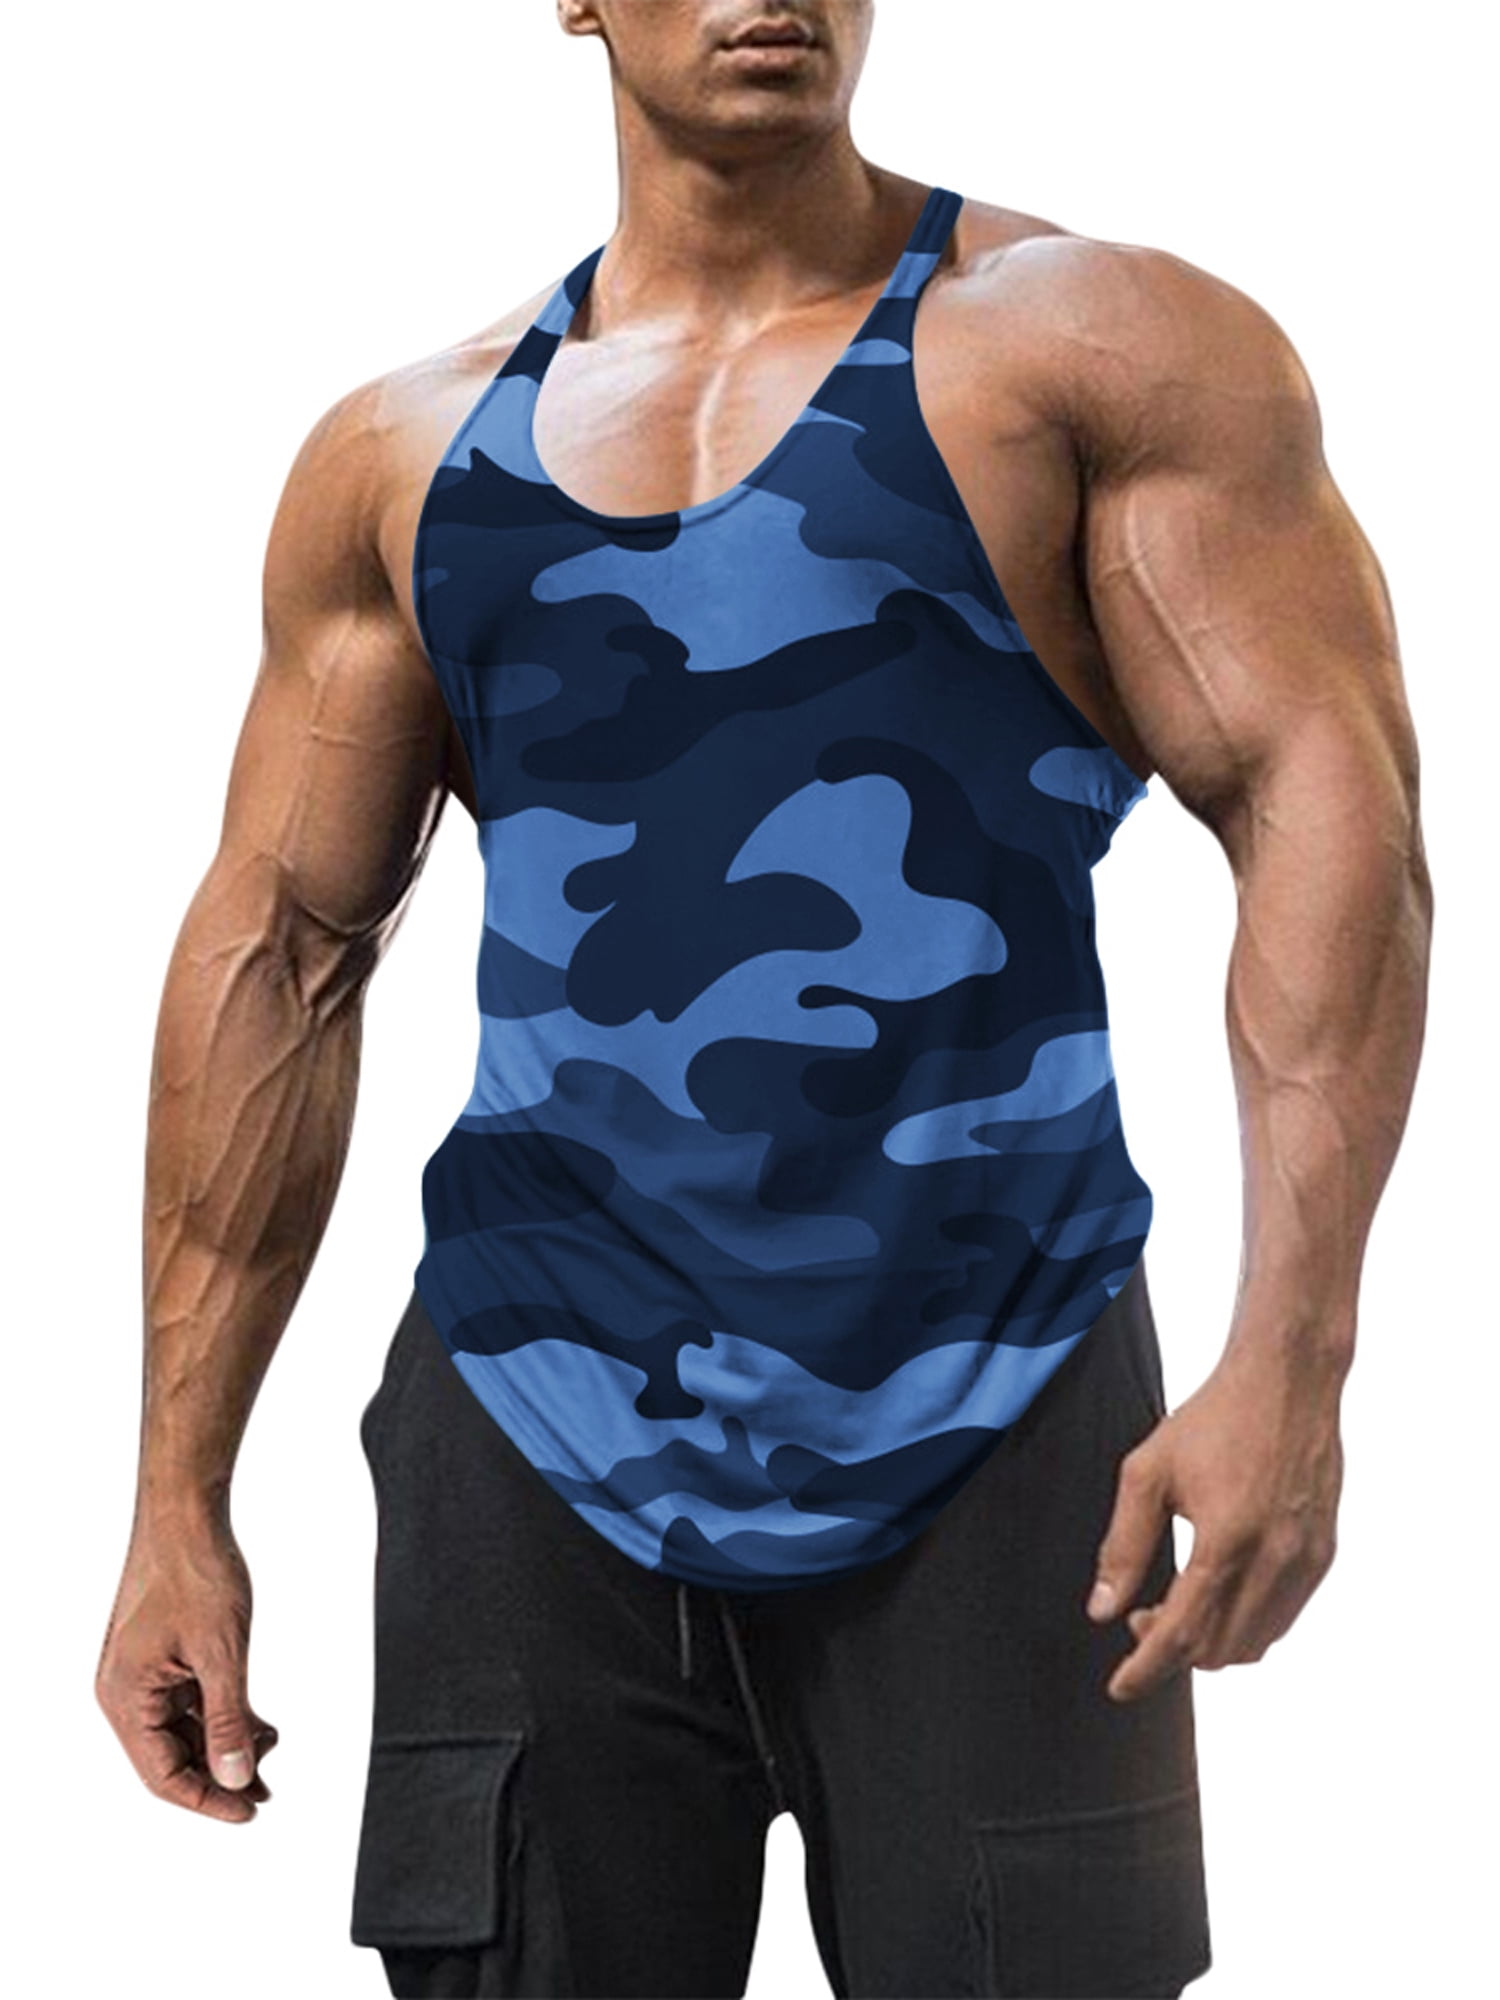 Remikst Men's Y-Back Tank Top Sleeveless Dry Fit Gym Shirt,M-2XL ...